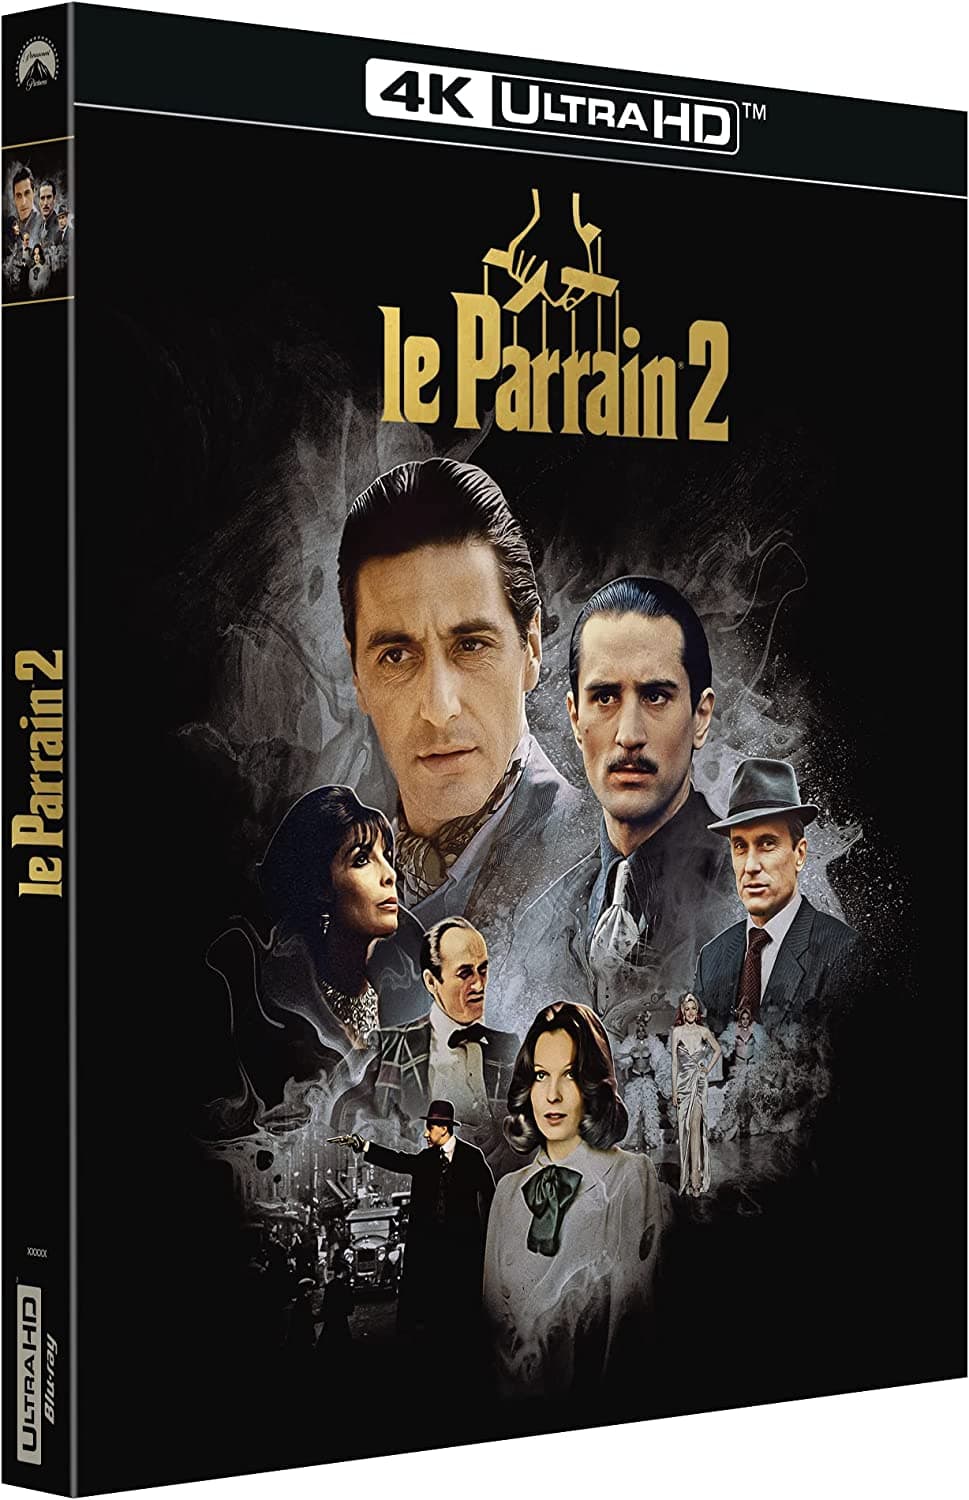 Le Parrain III Vs Le Parrain : La Mort de Michael Corleone - Comparatif  image Blu-ray - News Blu-ray / DVD - DigitalCiné